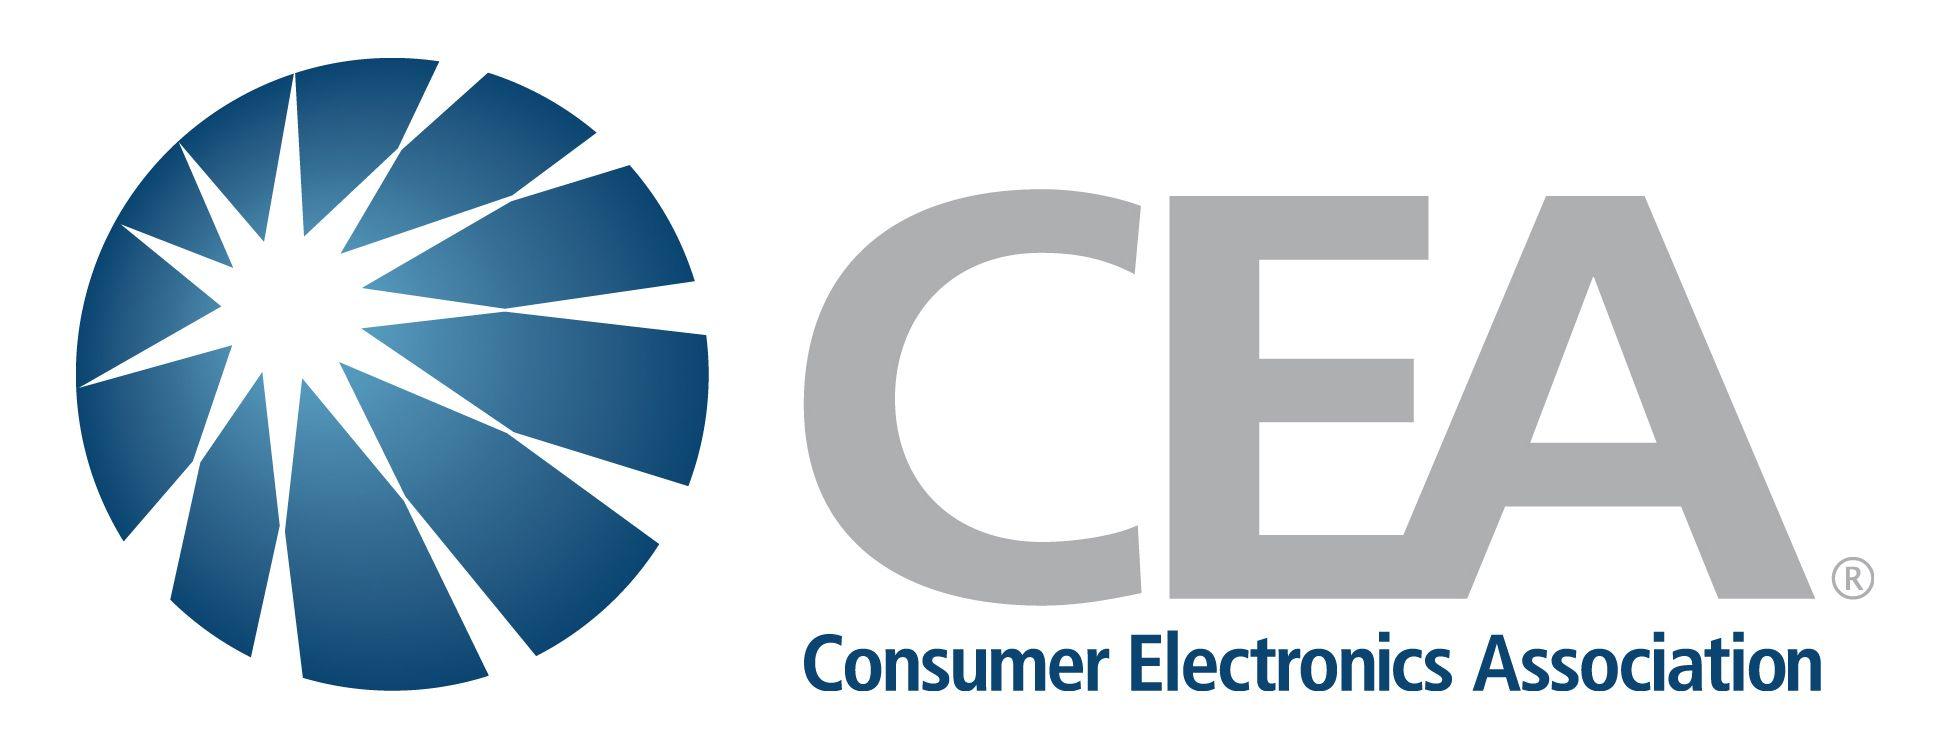 Cea Logo - Image - CEA-101 CEA-Logo.jpg | Logopedia | FANDOM powered by Wikia